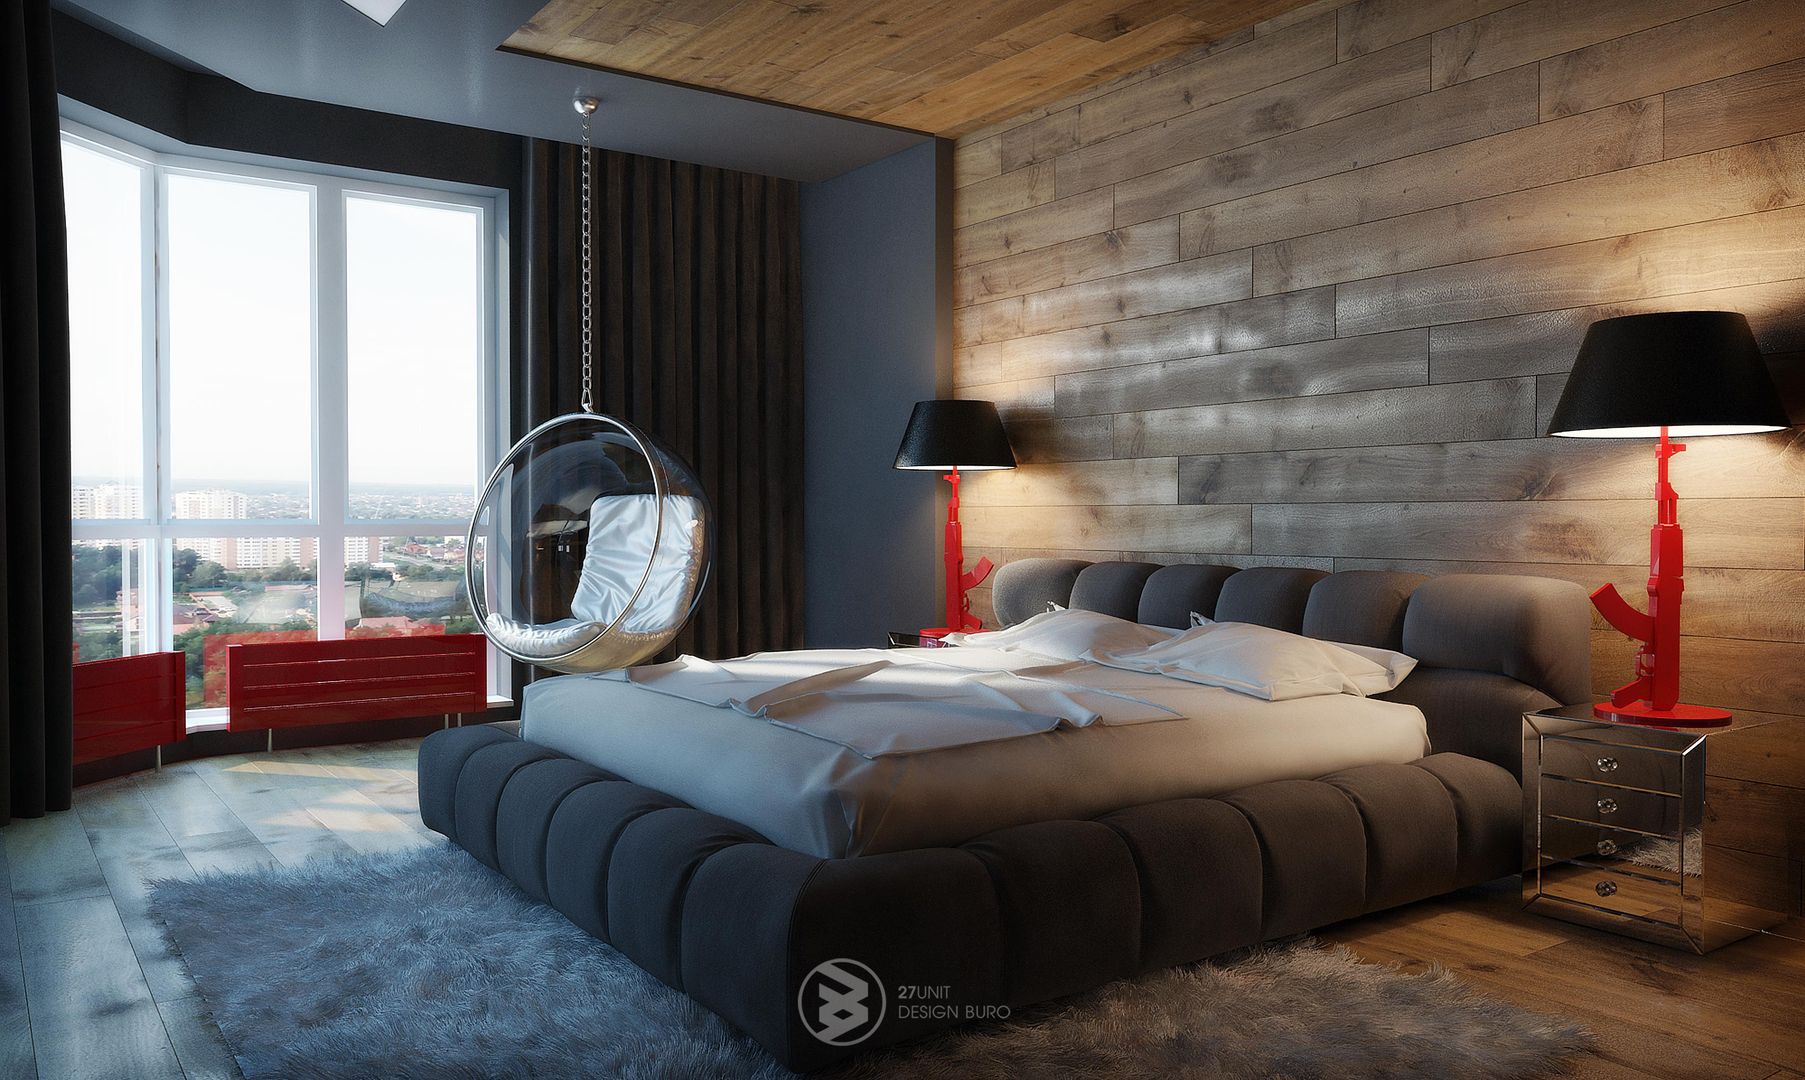 Квартира в Броварах 2, 27Unit design buro 27Unit design buro Eclectic style bedroom